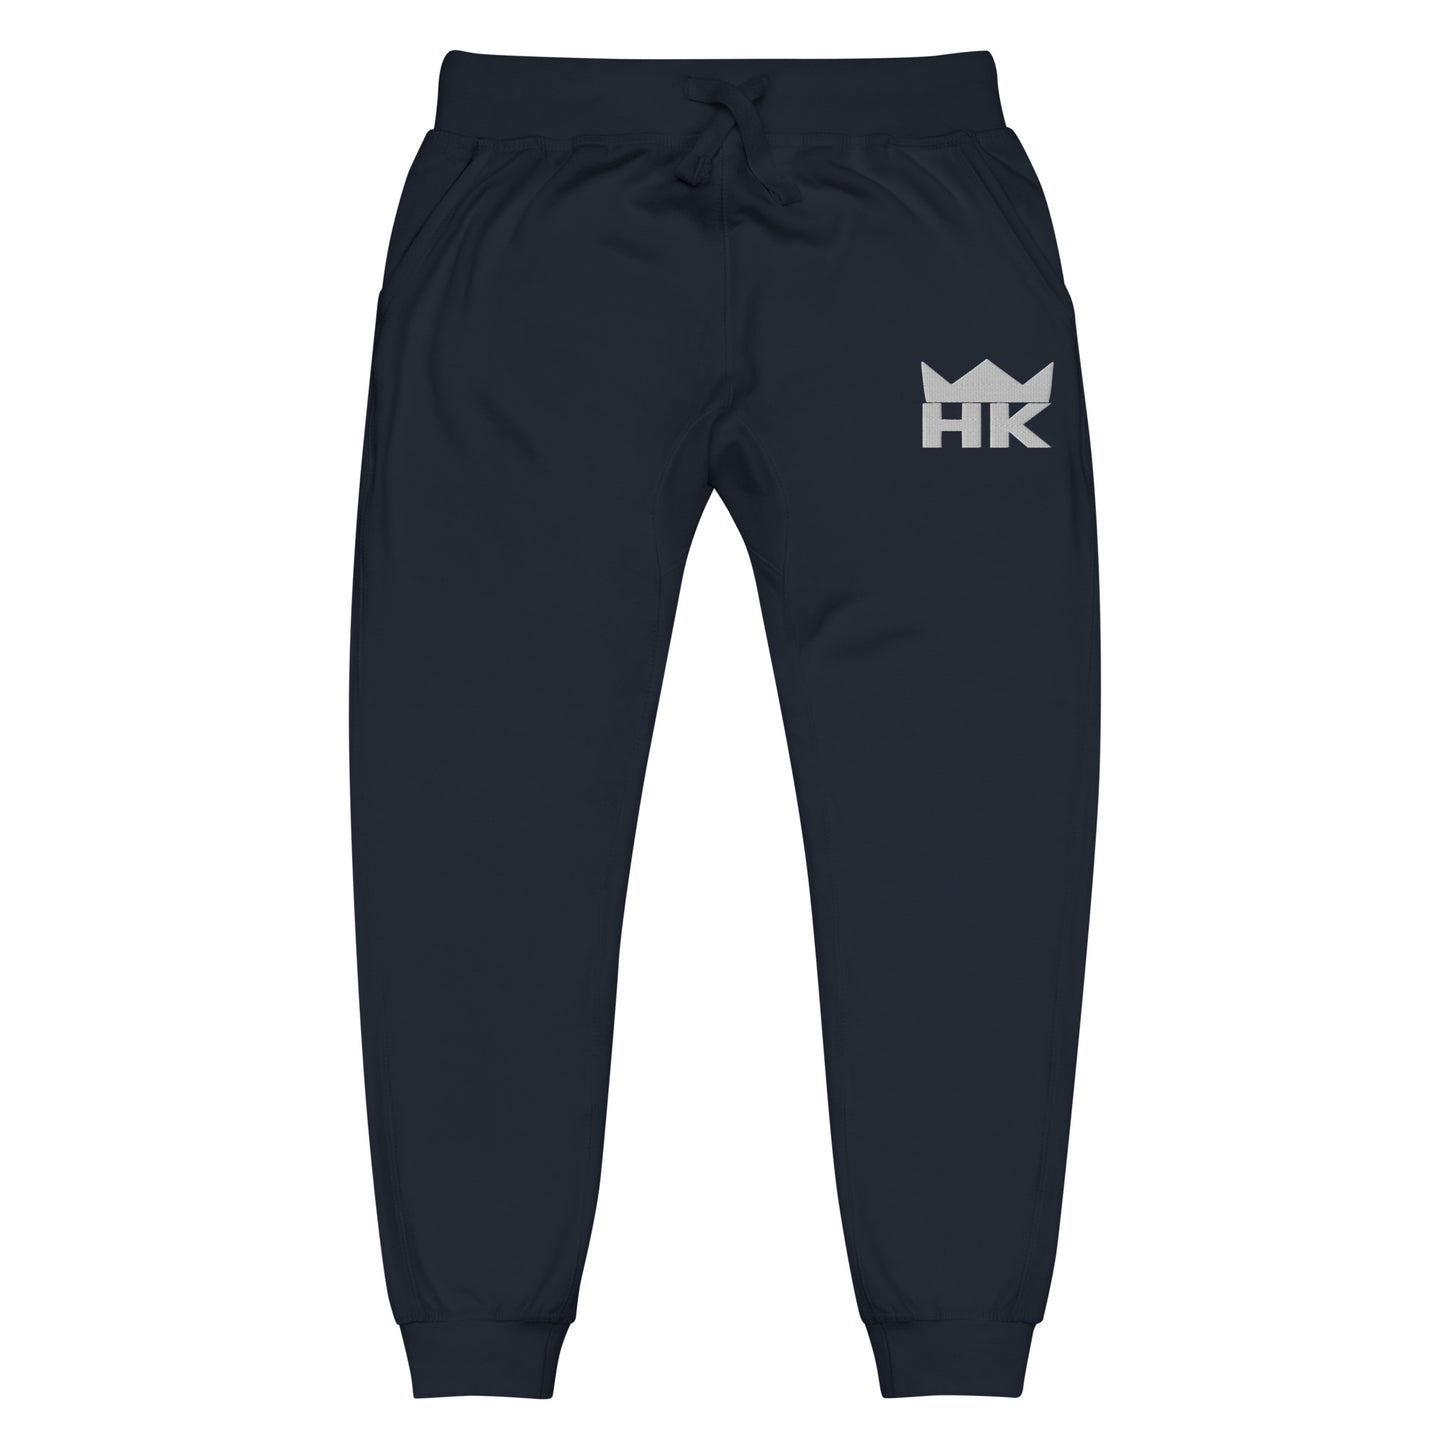 H & K Embroidered Fleece Sweatpants